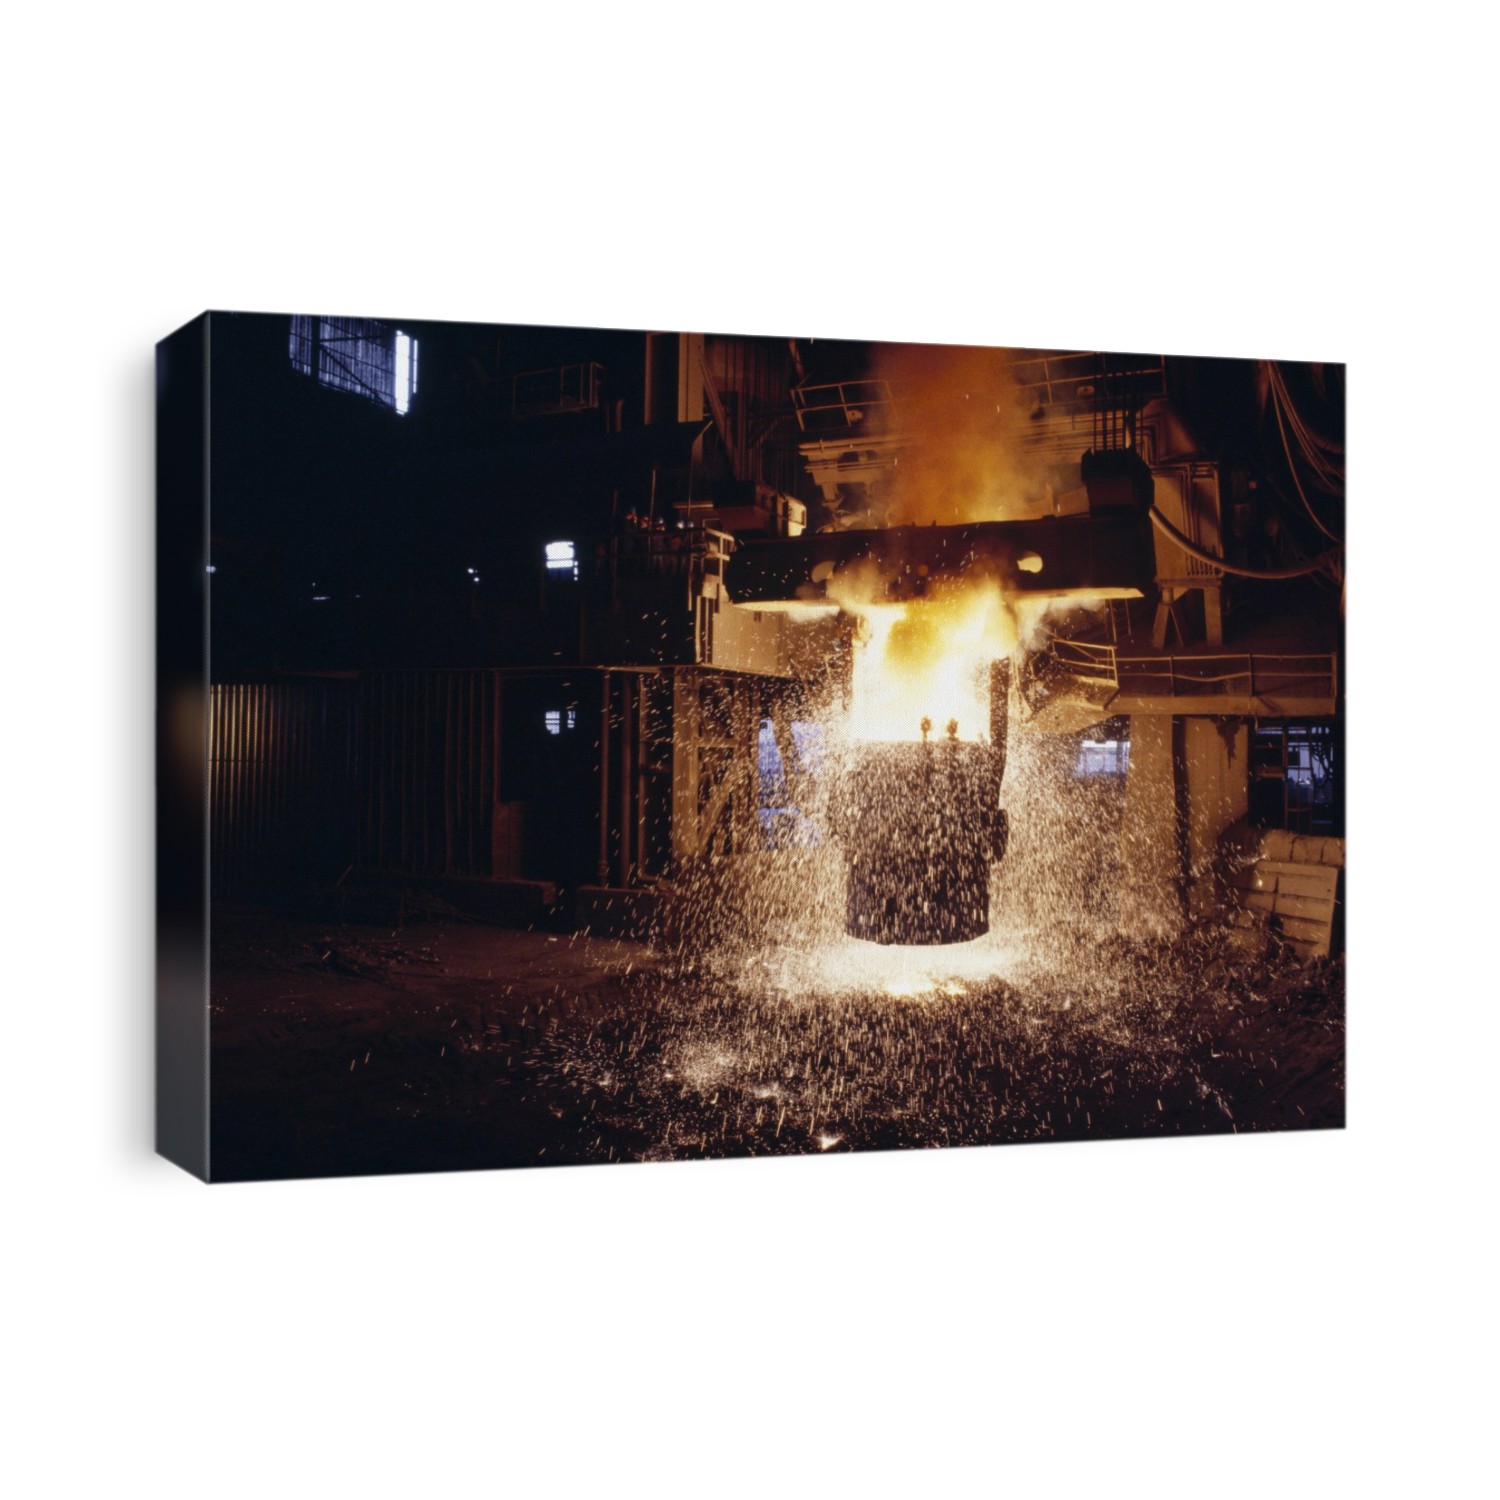 Steel casting in a blast furnace in Terni, Umbria, Italy.